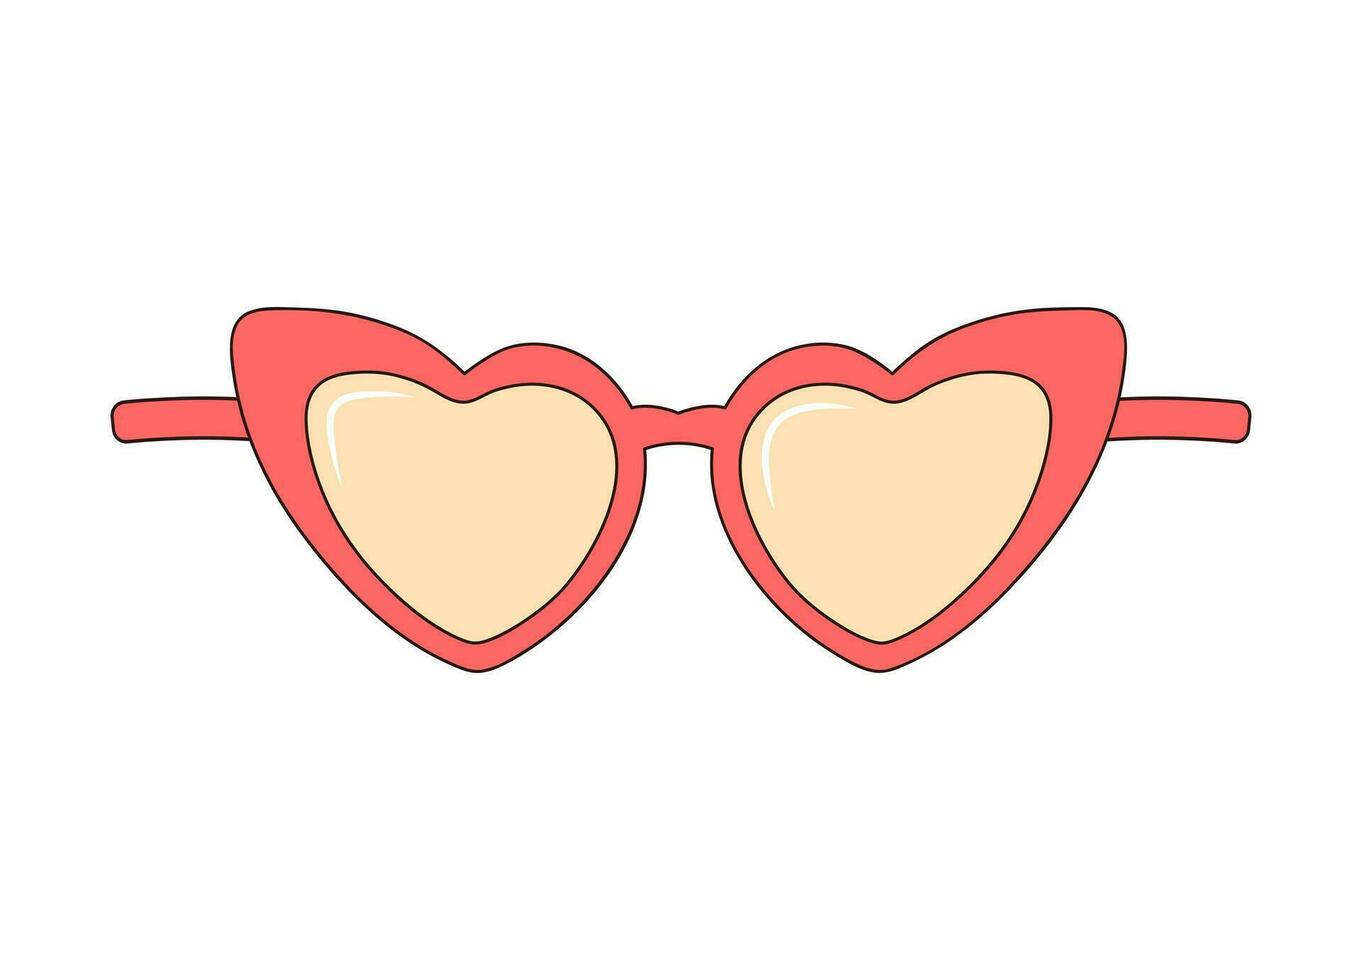 Heart shaped sunglasses. Groovy retro fashion style. Vector illustration isolated on white background.